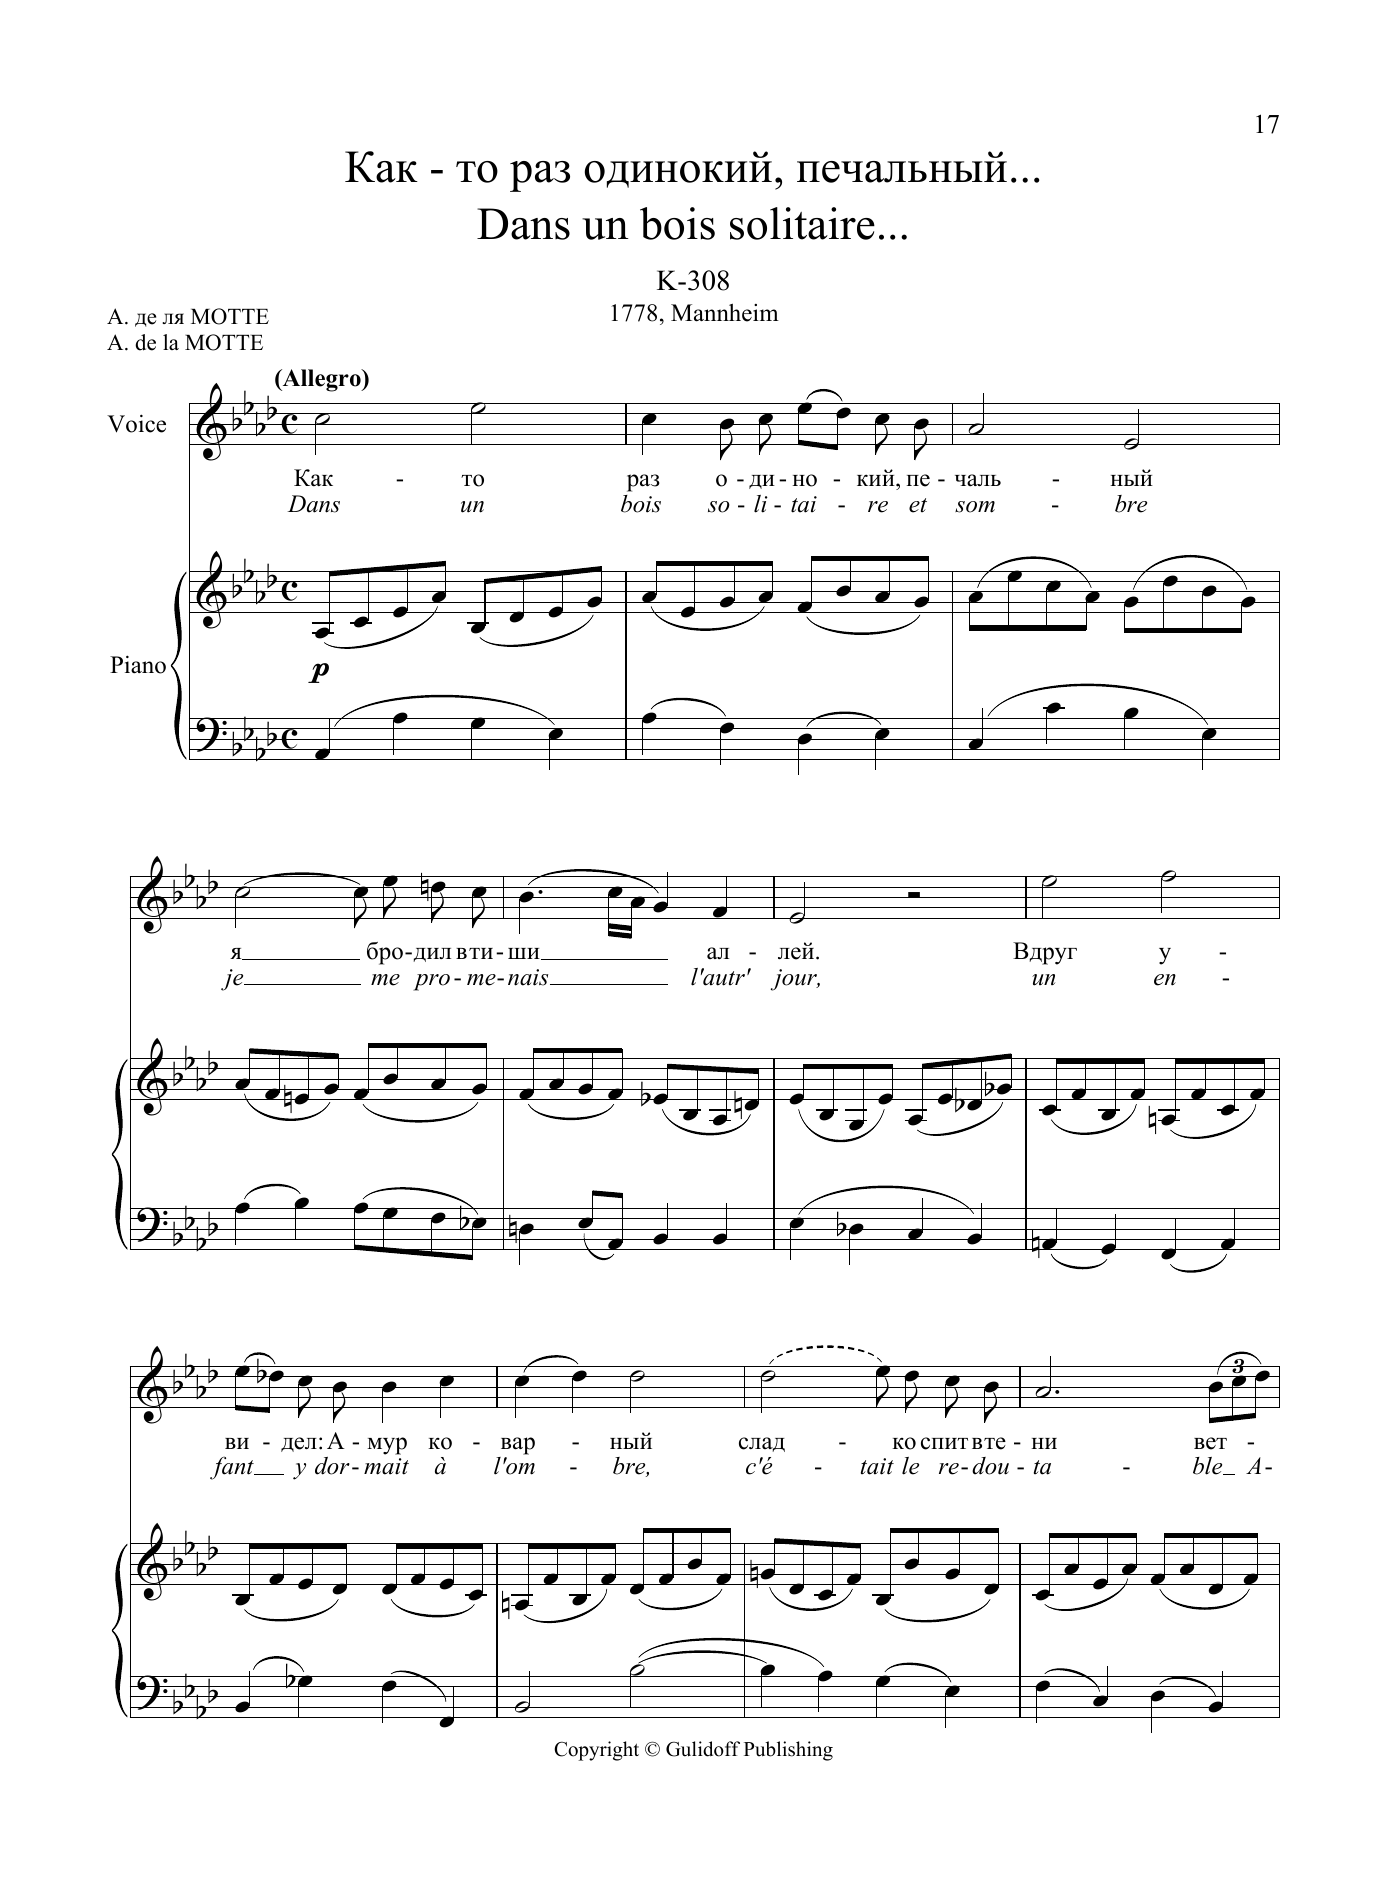 Download Wolfgang Amadeus Mozart 36 Songs Vol. 1: Dans un bois solitaire Sheet Music